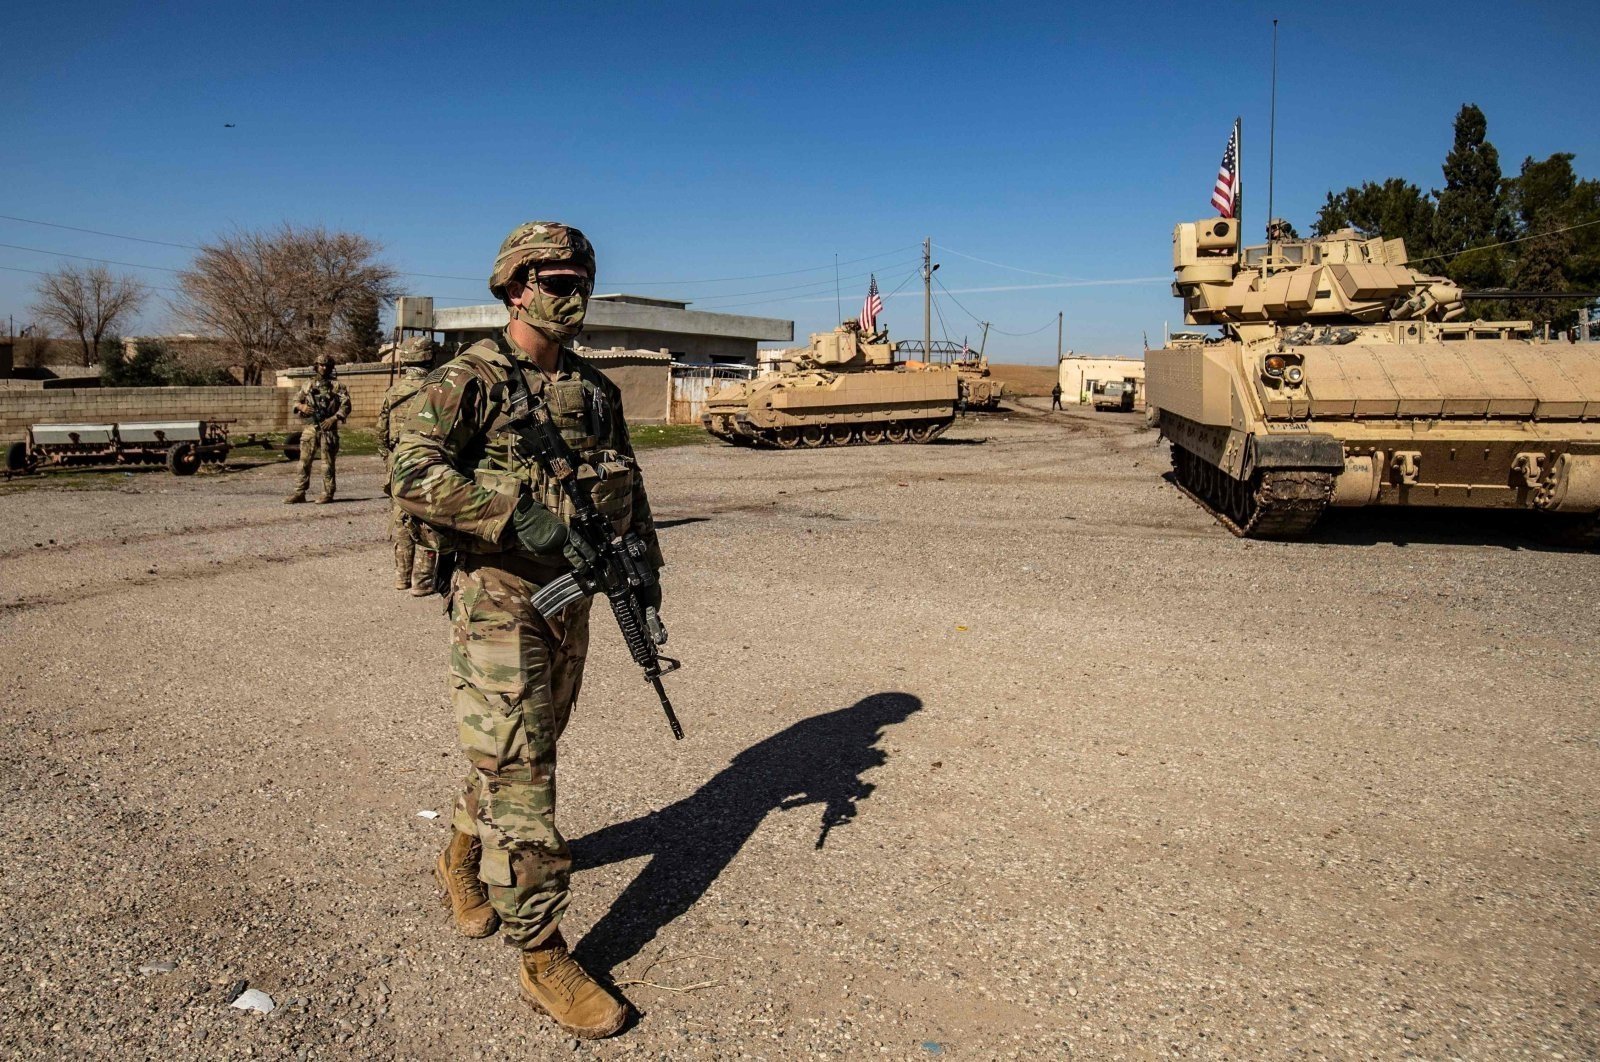 A U.S. soldier walks near a Bradley Fighting Vehicle (BFV) during a patrol in the countryside near al-Malikiyah (Derik) in Hassakeh province, northeastern Syria, Feb. 2, 2021. (AFP Photo)